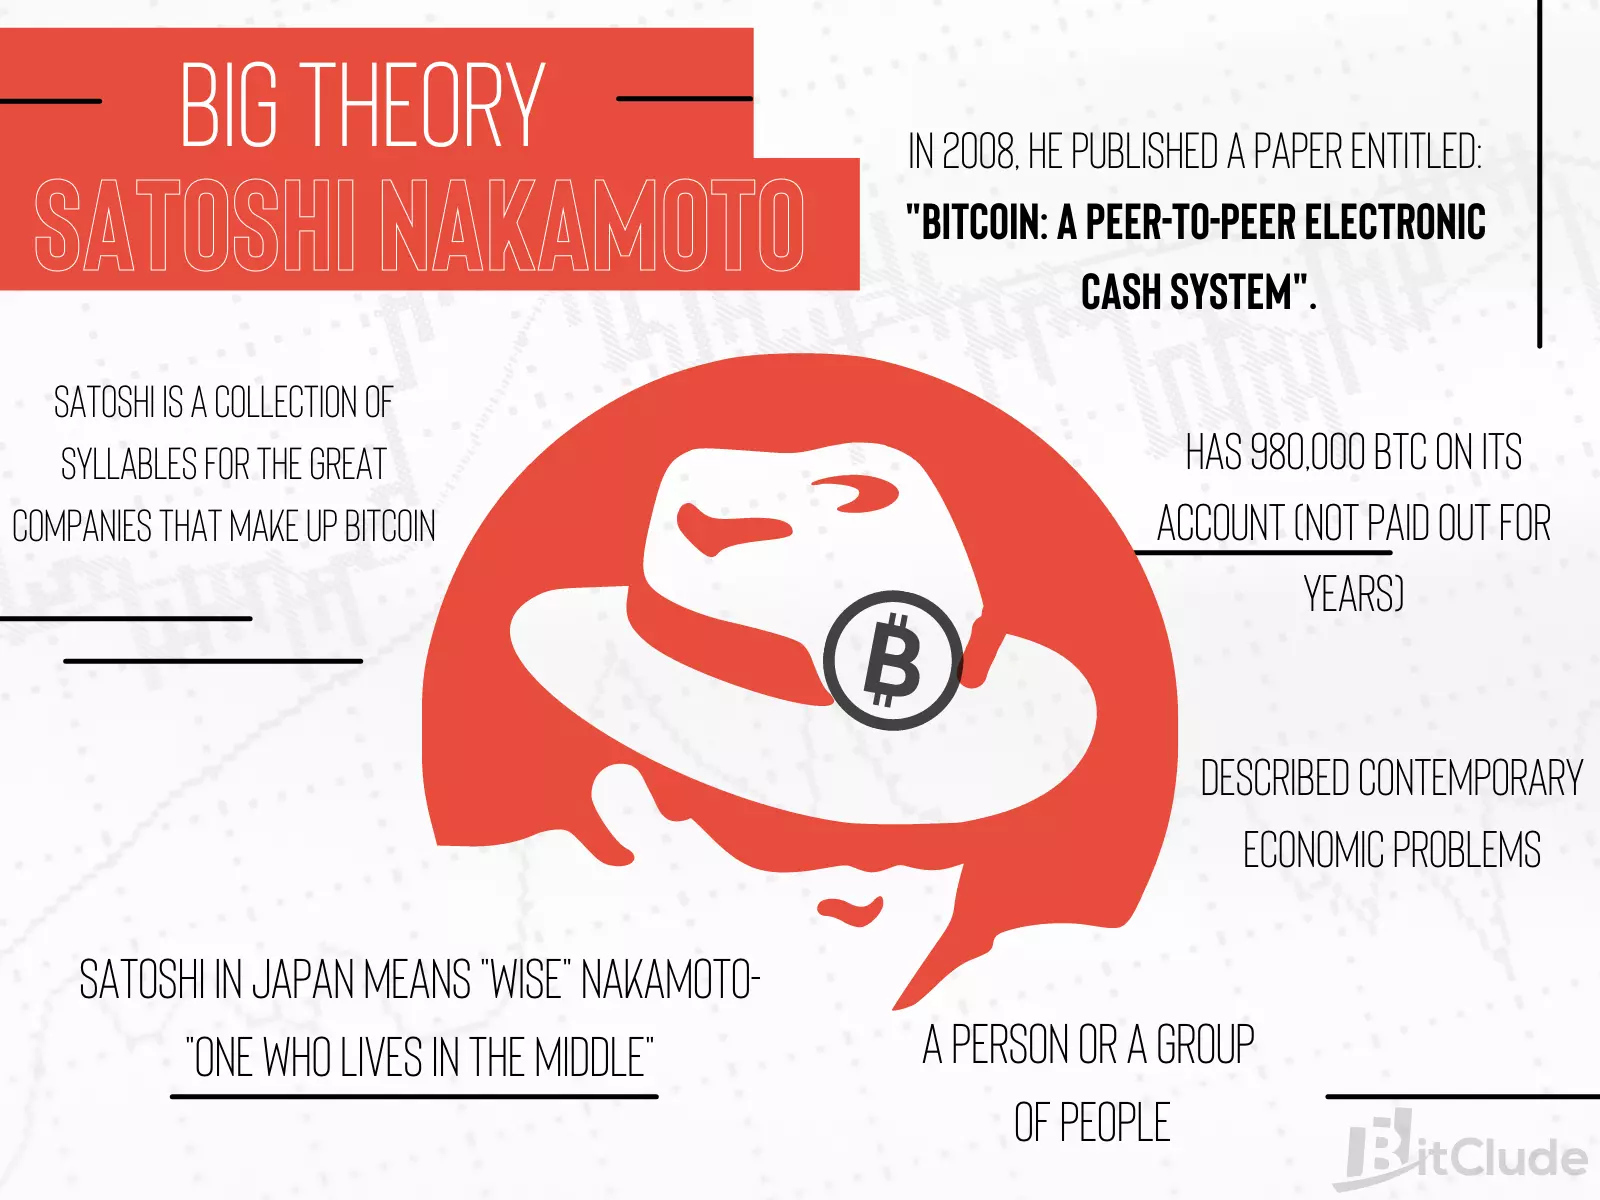 Who was Satoshi Nakamoto?